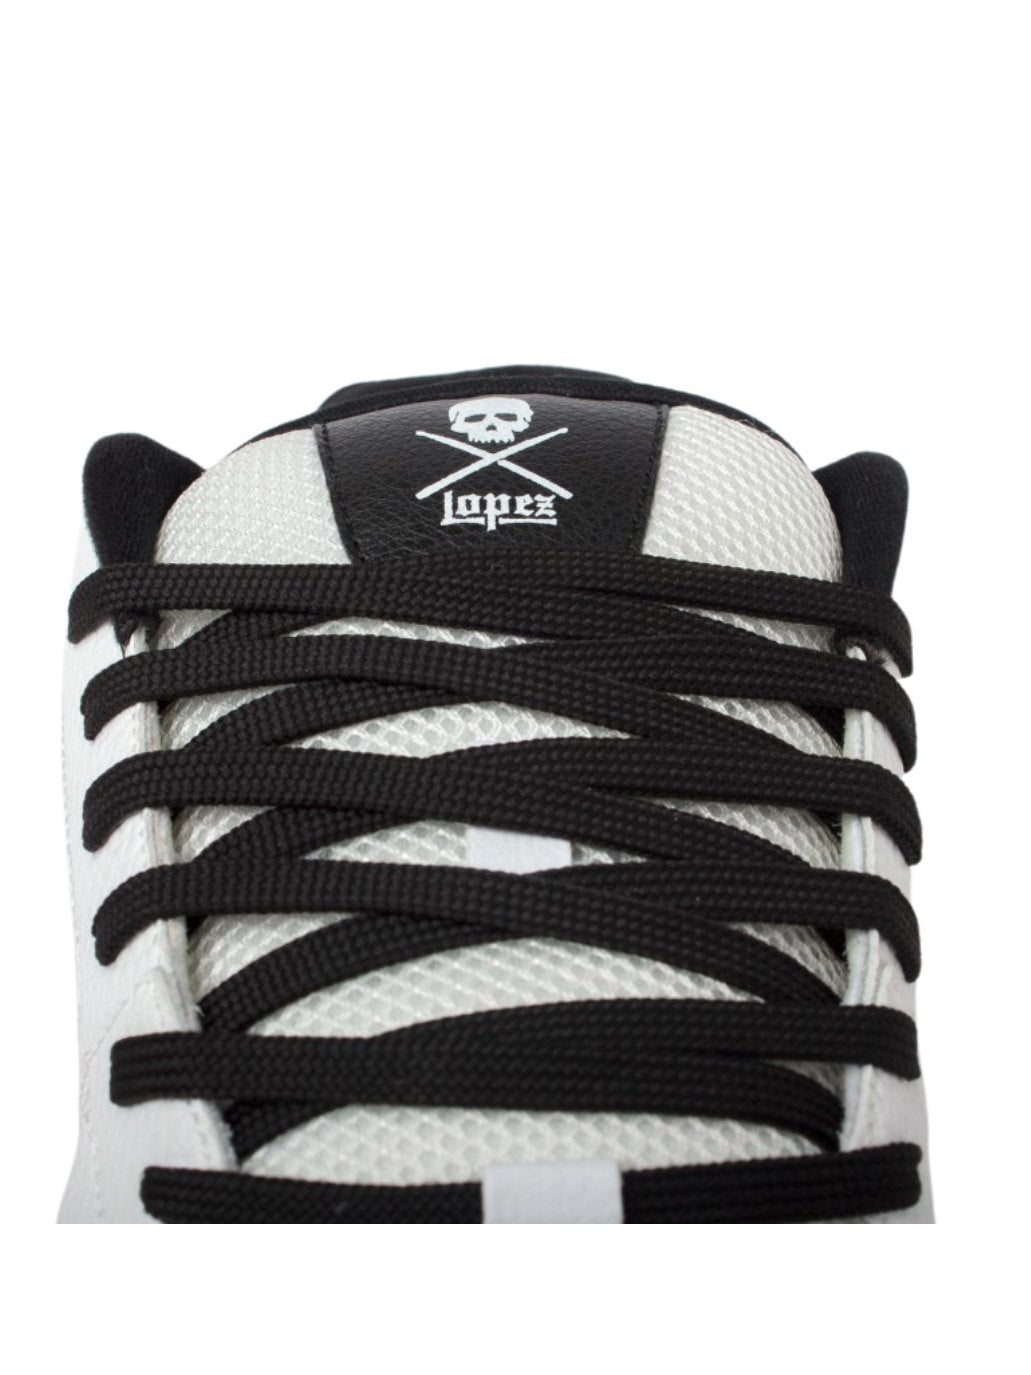 Zapatillas de skate Circa 805 White/Gum | surfdevils.com